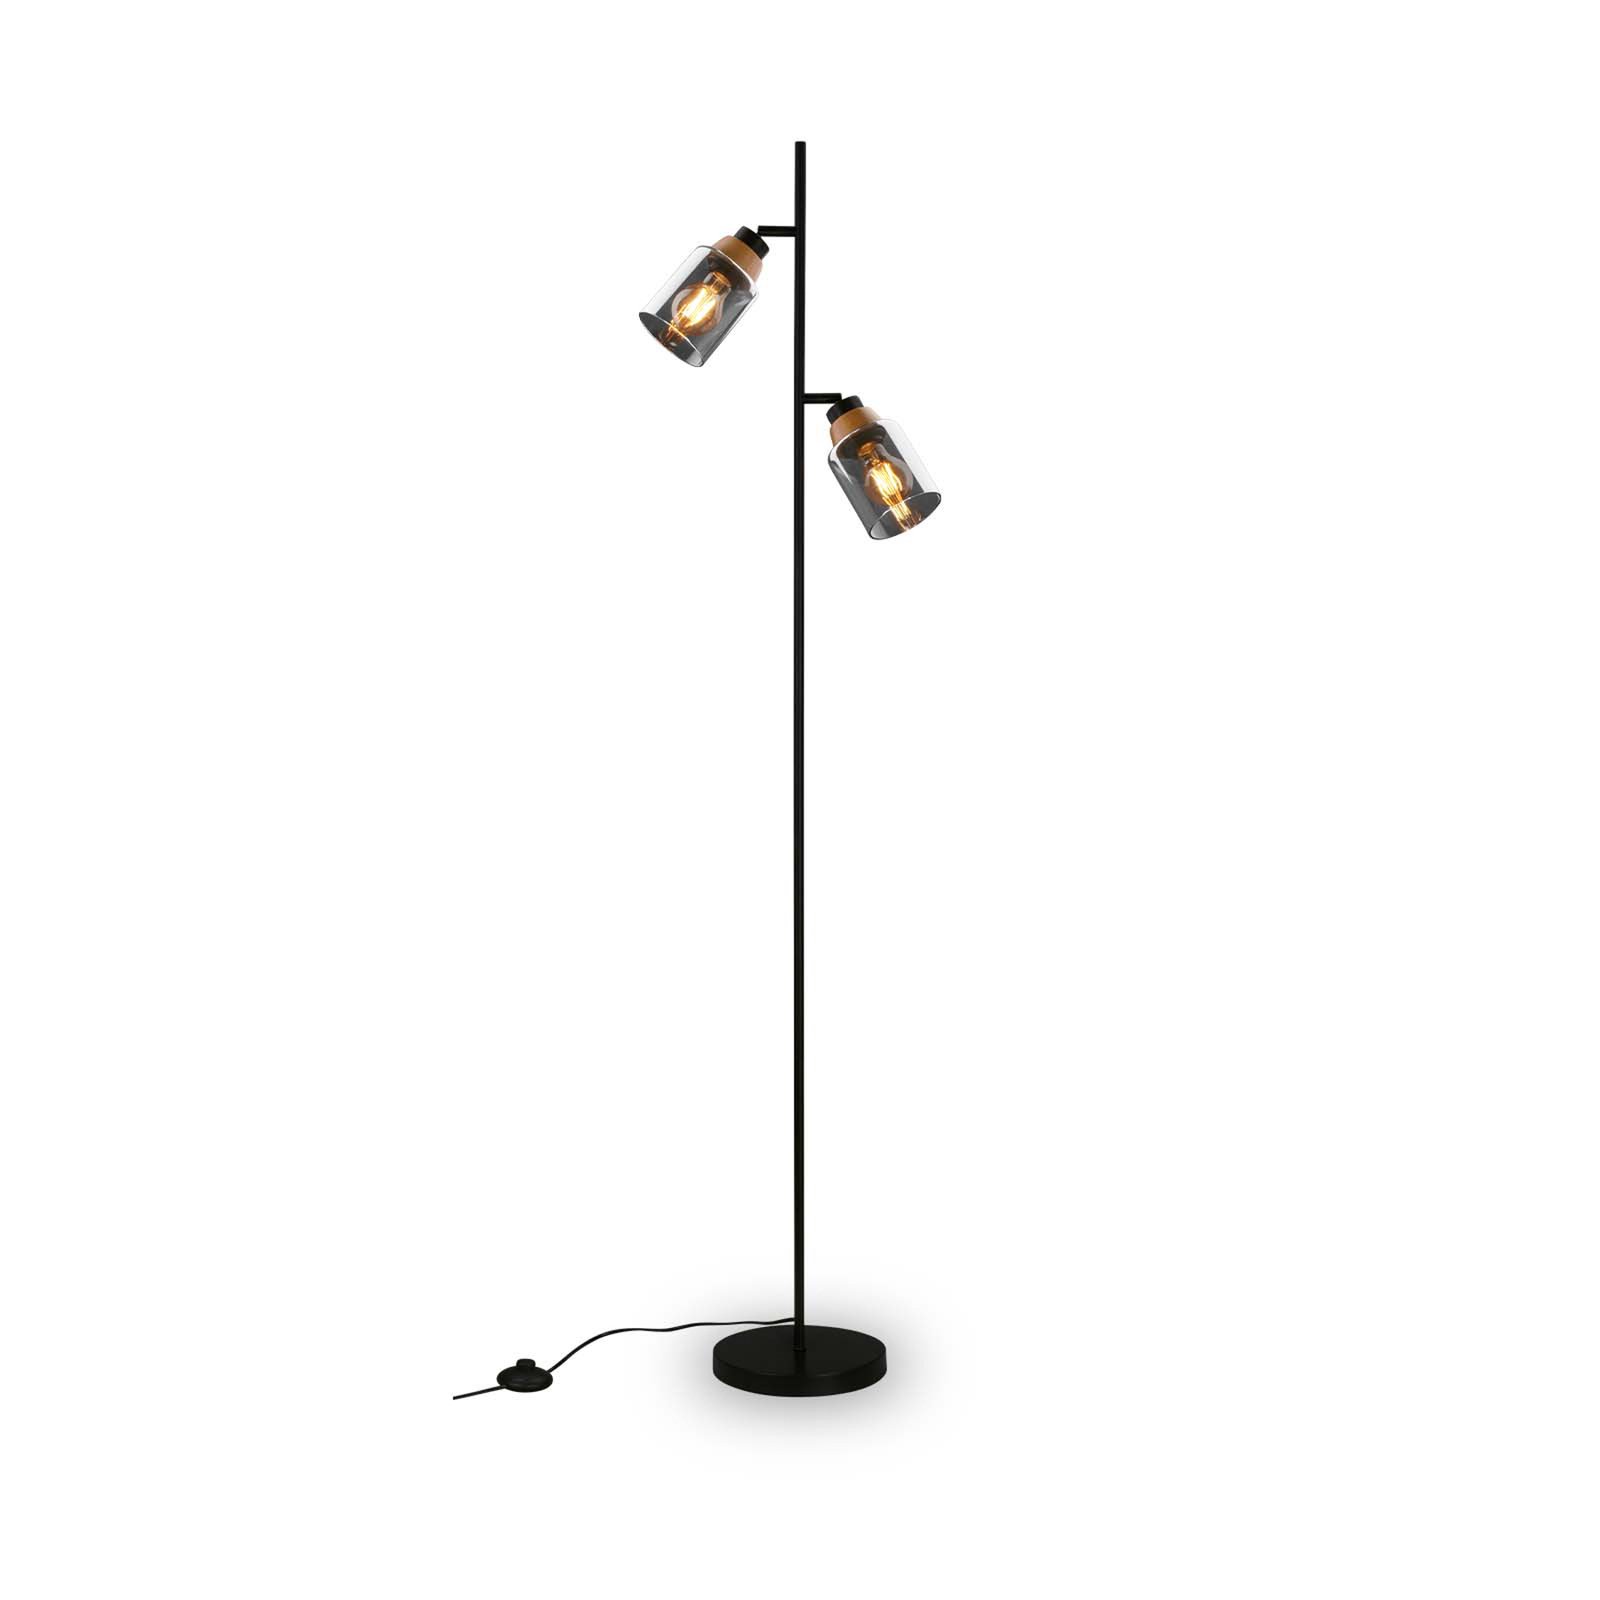 Vloerlamp 1486025 2-lamps, kappen rookglas